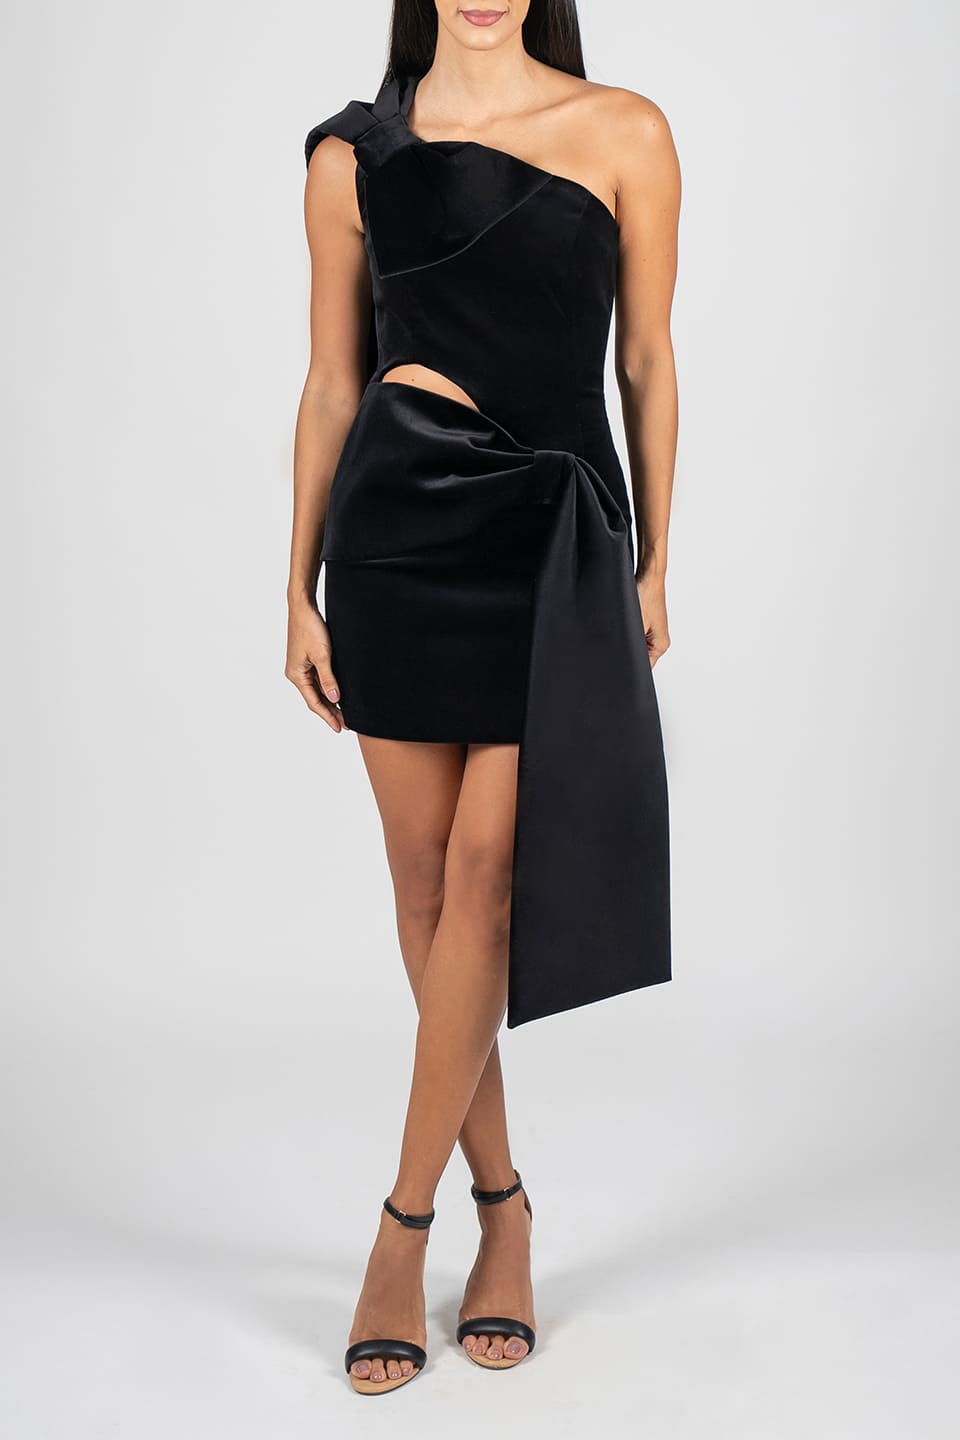 Shop online trendy Black Mini dresses from Vivetta Fashion designer. Product gallery 1